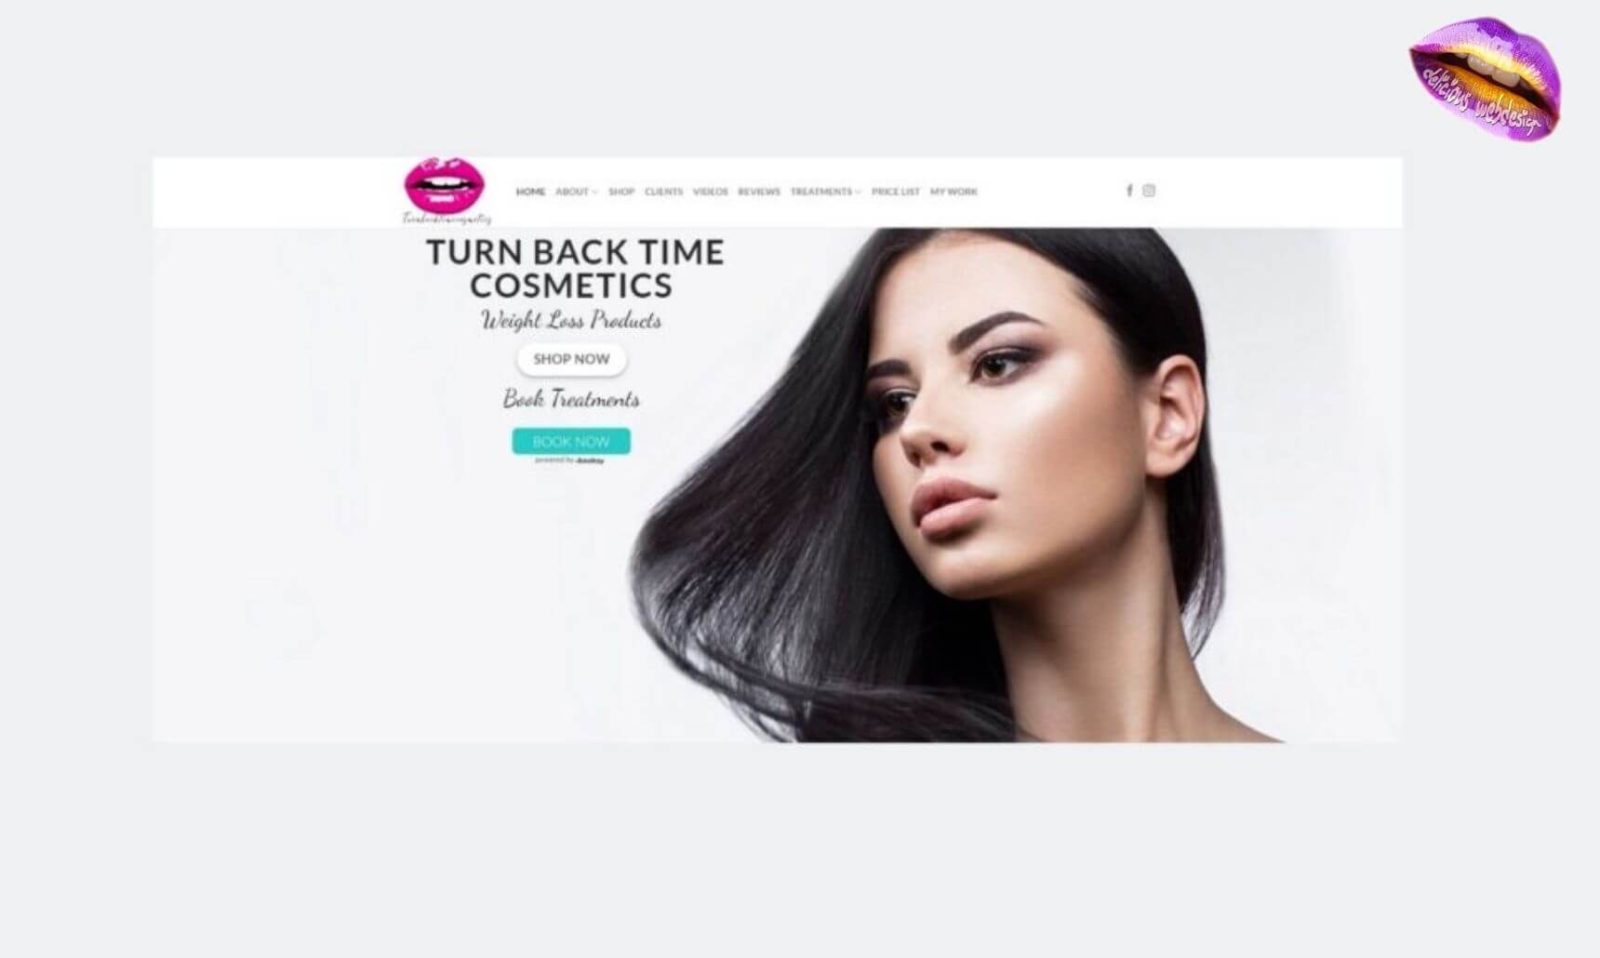 Turn back time cosmetics 02 1024x599 1